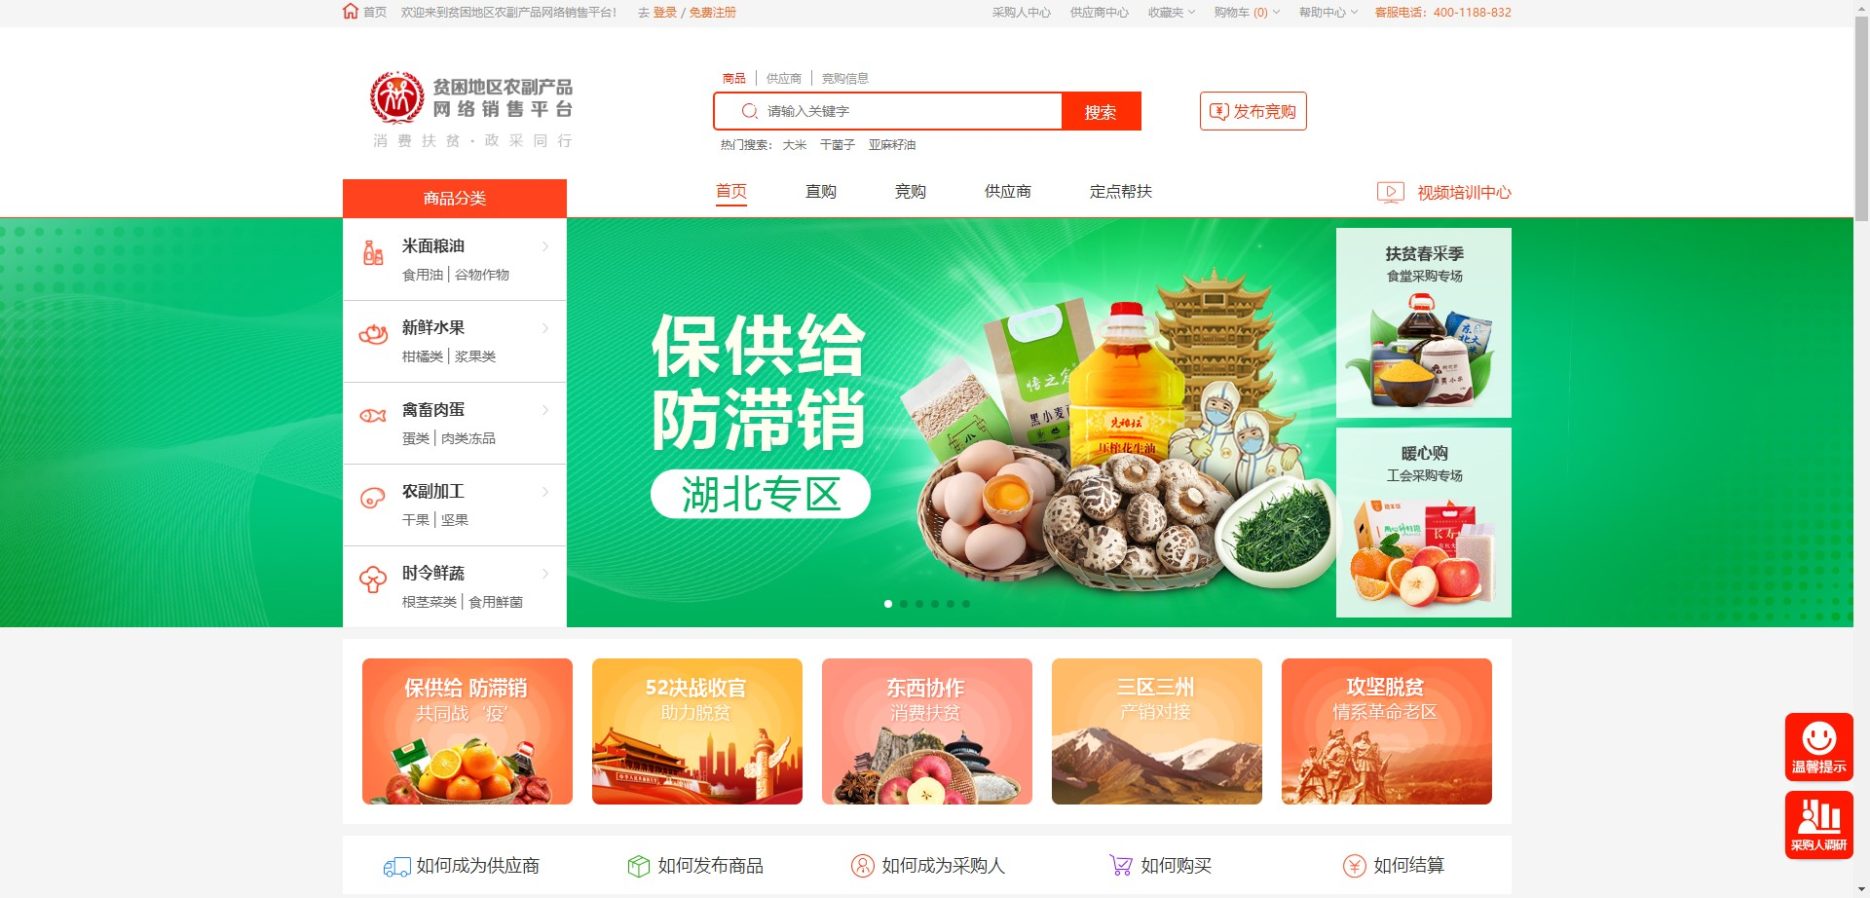 China's new anti-poverty e-commerce platform